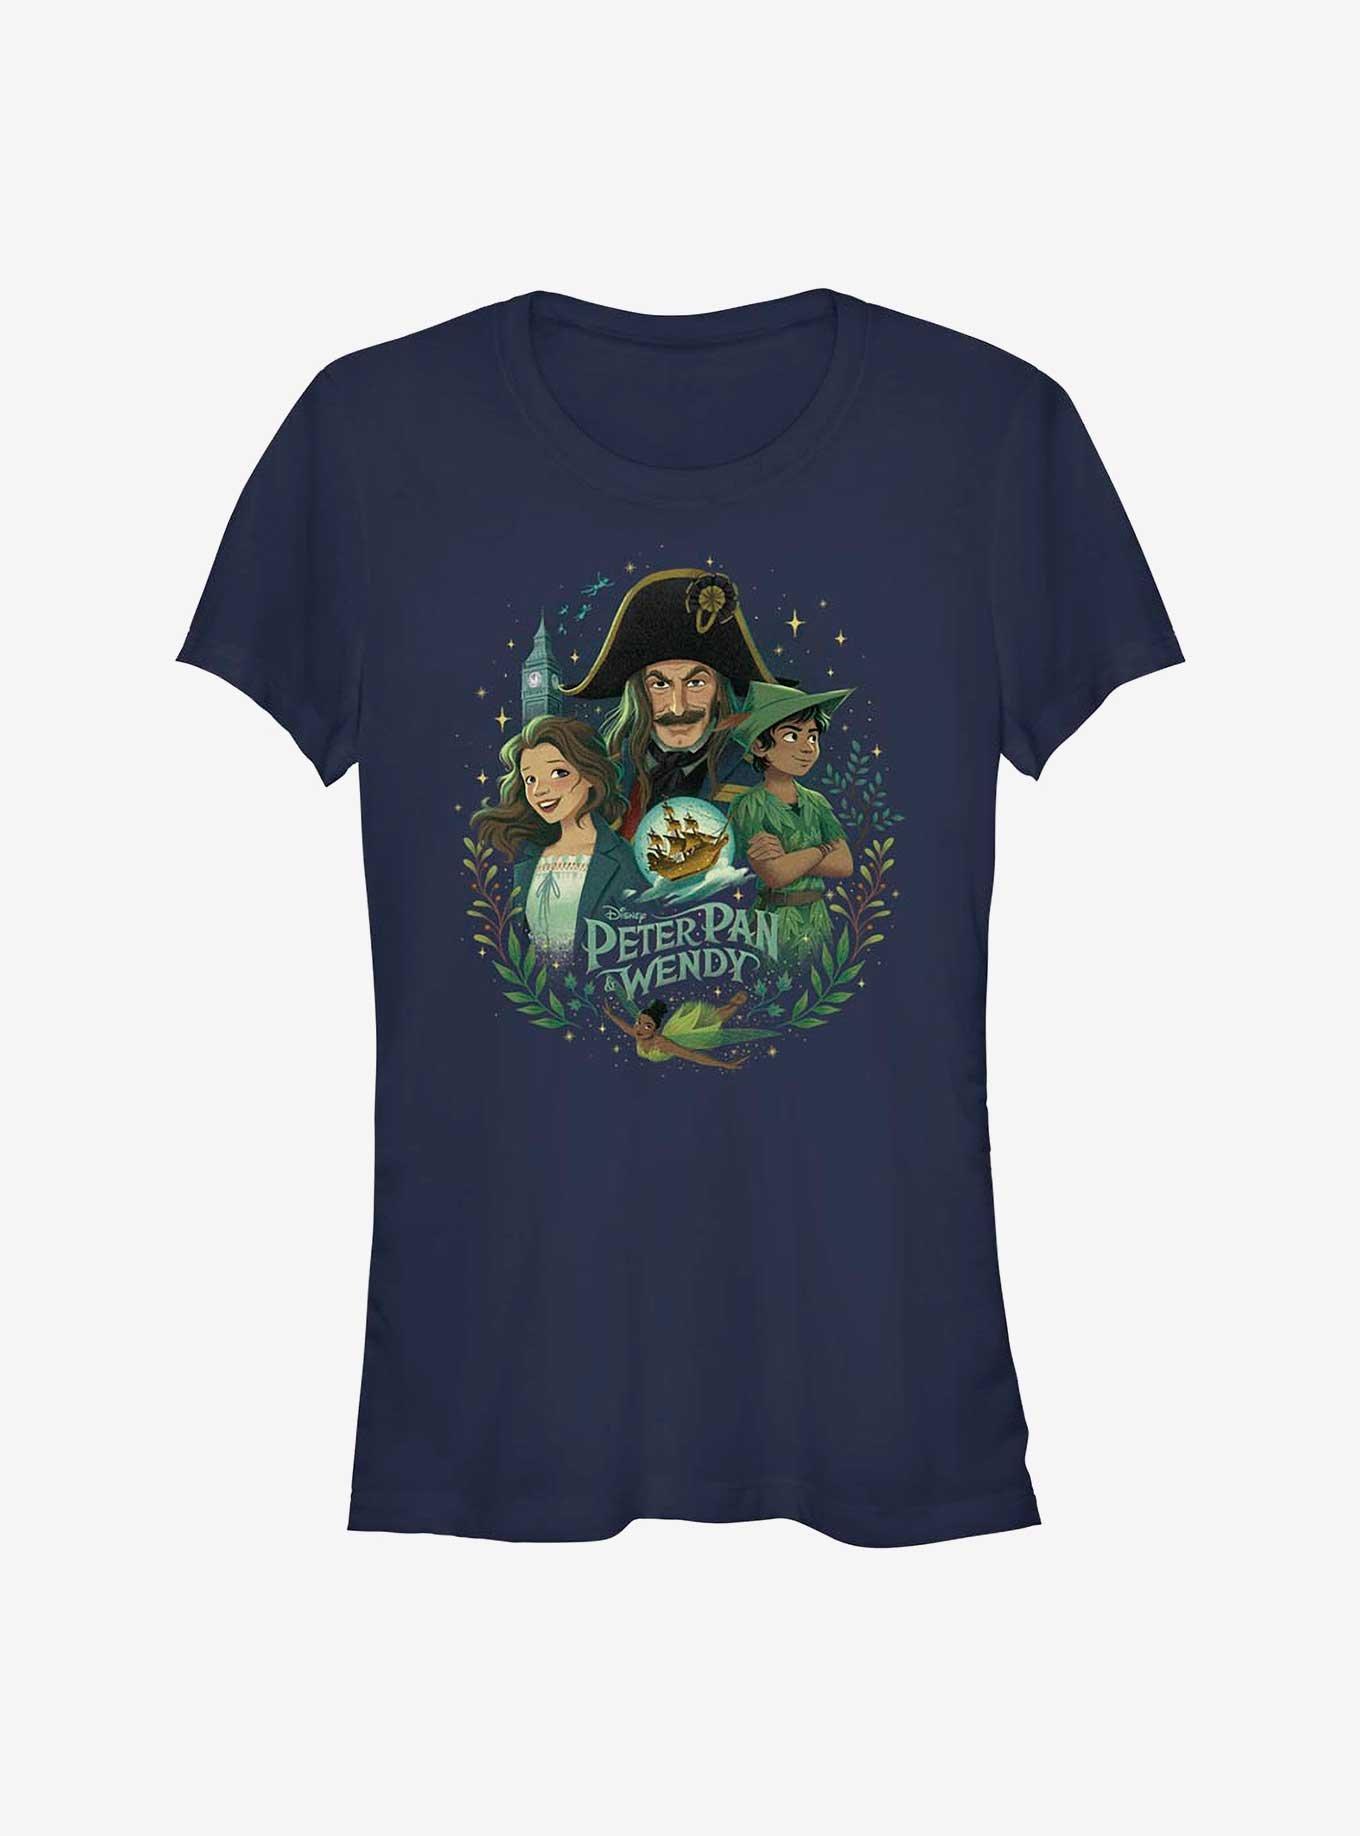 Disney Peter Pan & Wendy Neverland Group Girls T-Shirt, NAVY, hi-res